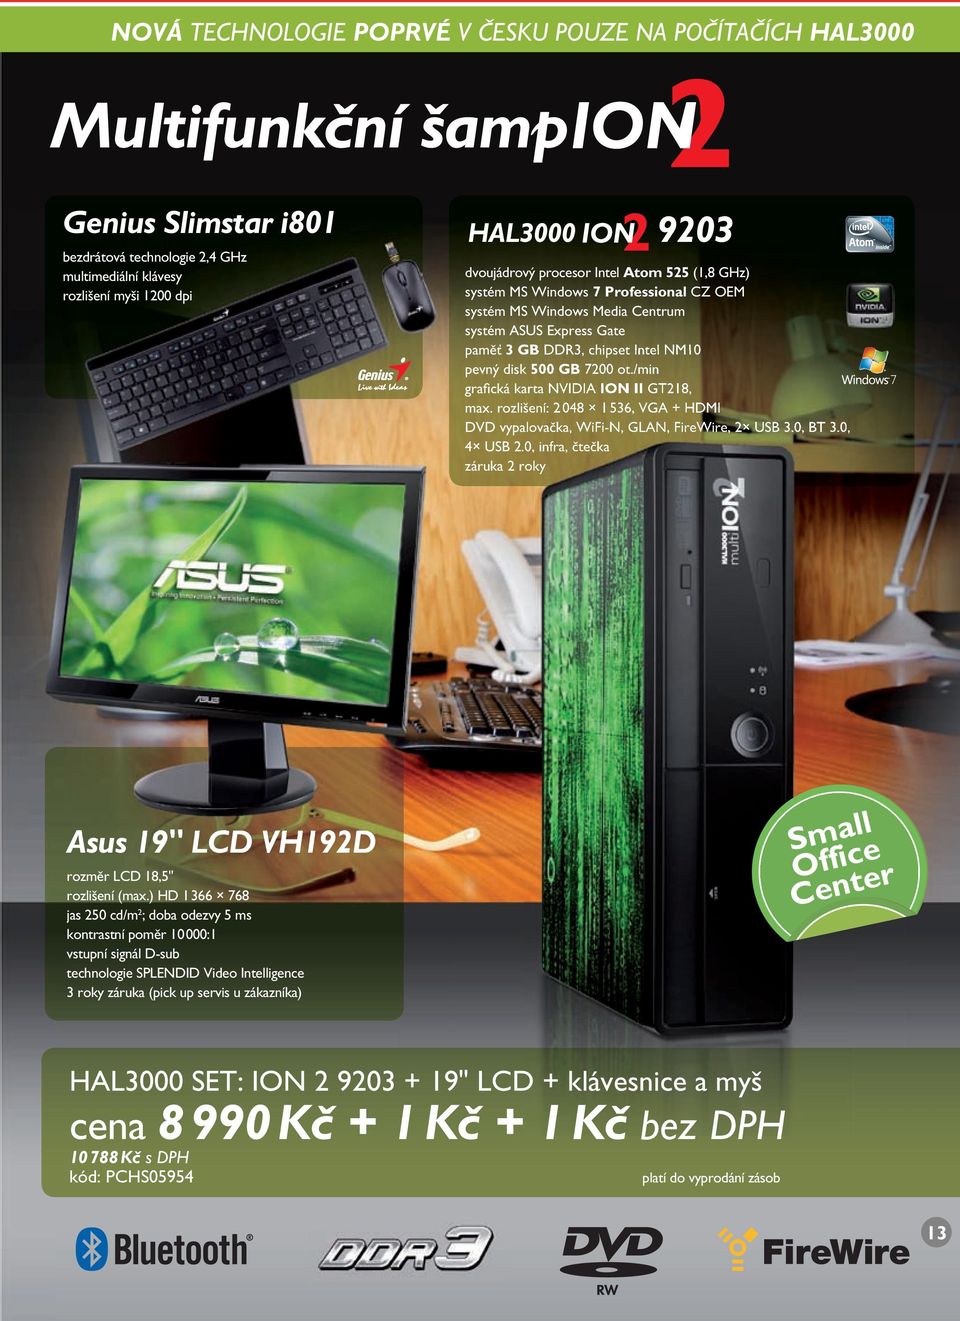 7200 ot./min grafi cká karta NVIDIA ION II GT218, max. rozlišení: 2 048 1 536, VGA + HDMI DVD vypalovačka, WiFi-N, GLAN, FireWire, 2 USB 3.0, BT 3.0, 4 USB 2.